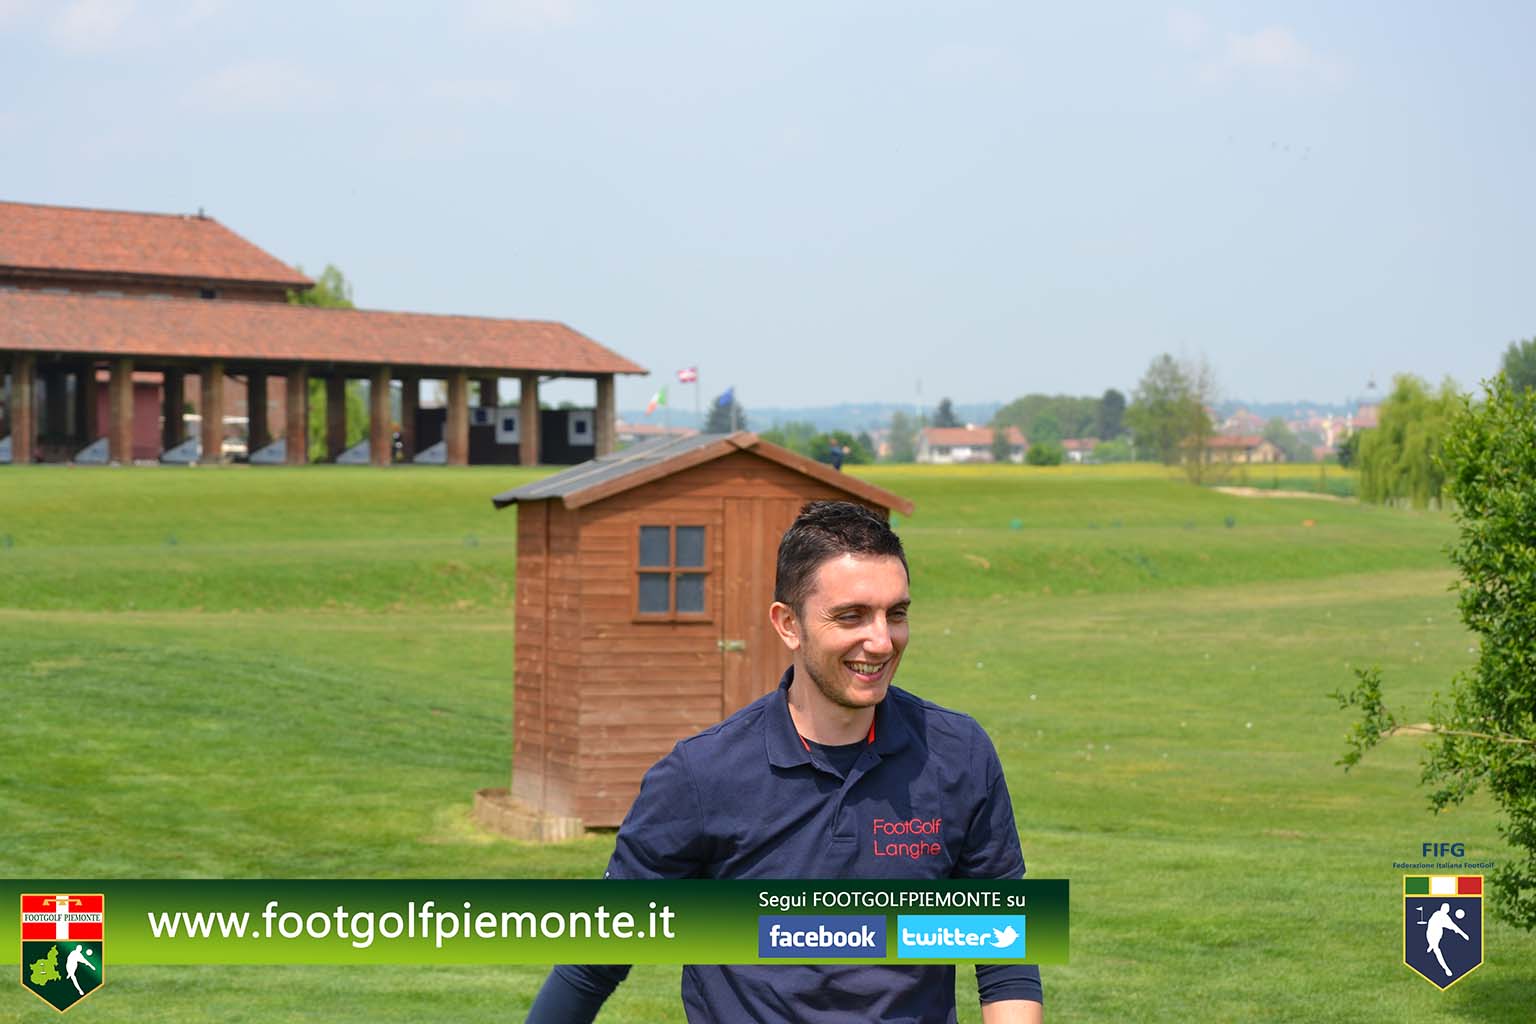 FOTO 9 Regions’ Cup Footgolf Piemonte 2016 Golf Città di Asti (At) 30apr16-47